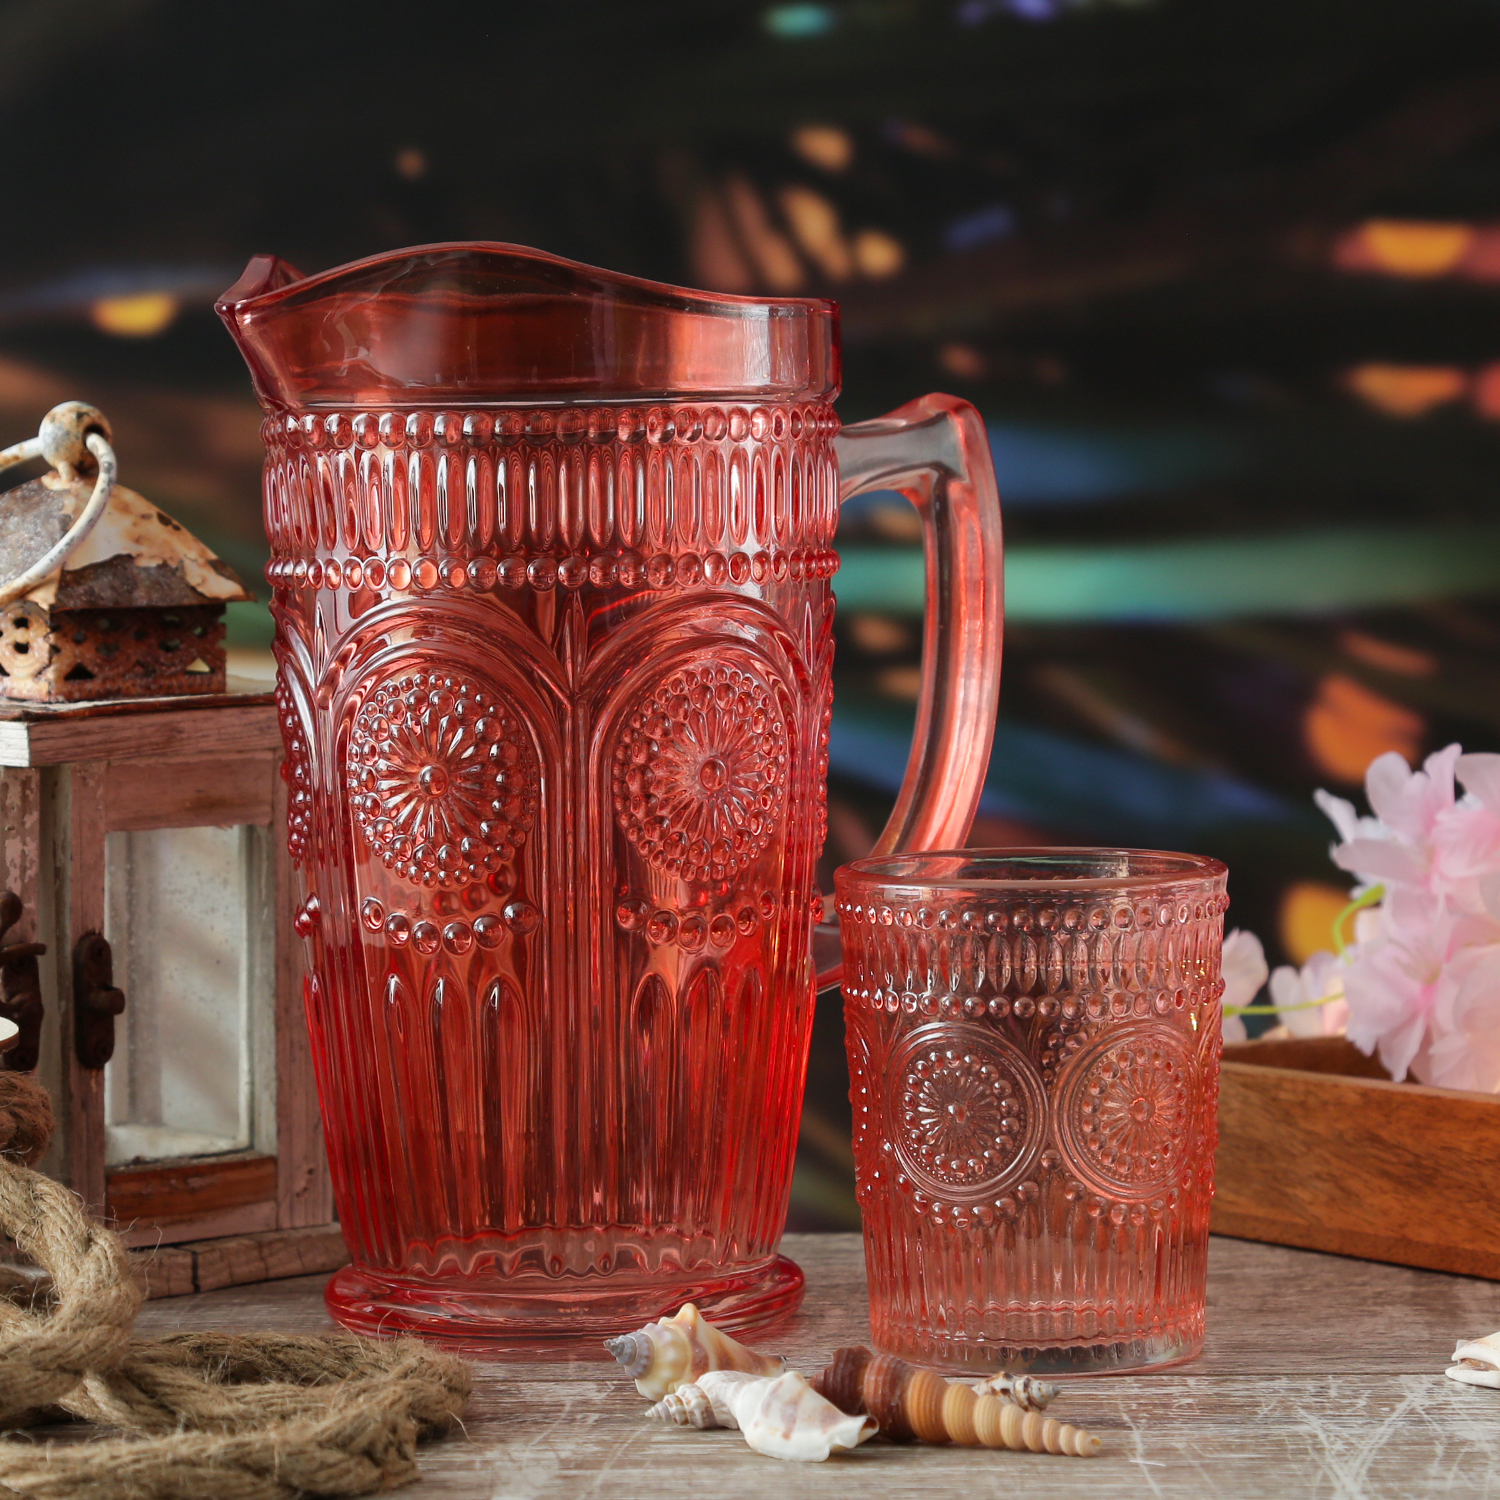 Trinkglas Vintage - Glas - lebensmittelecht - 280ml - H: 10cm - mit Muster - rosa